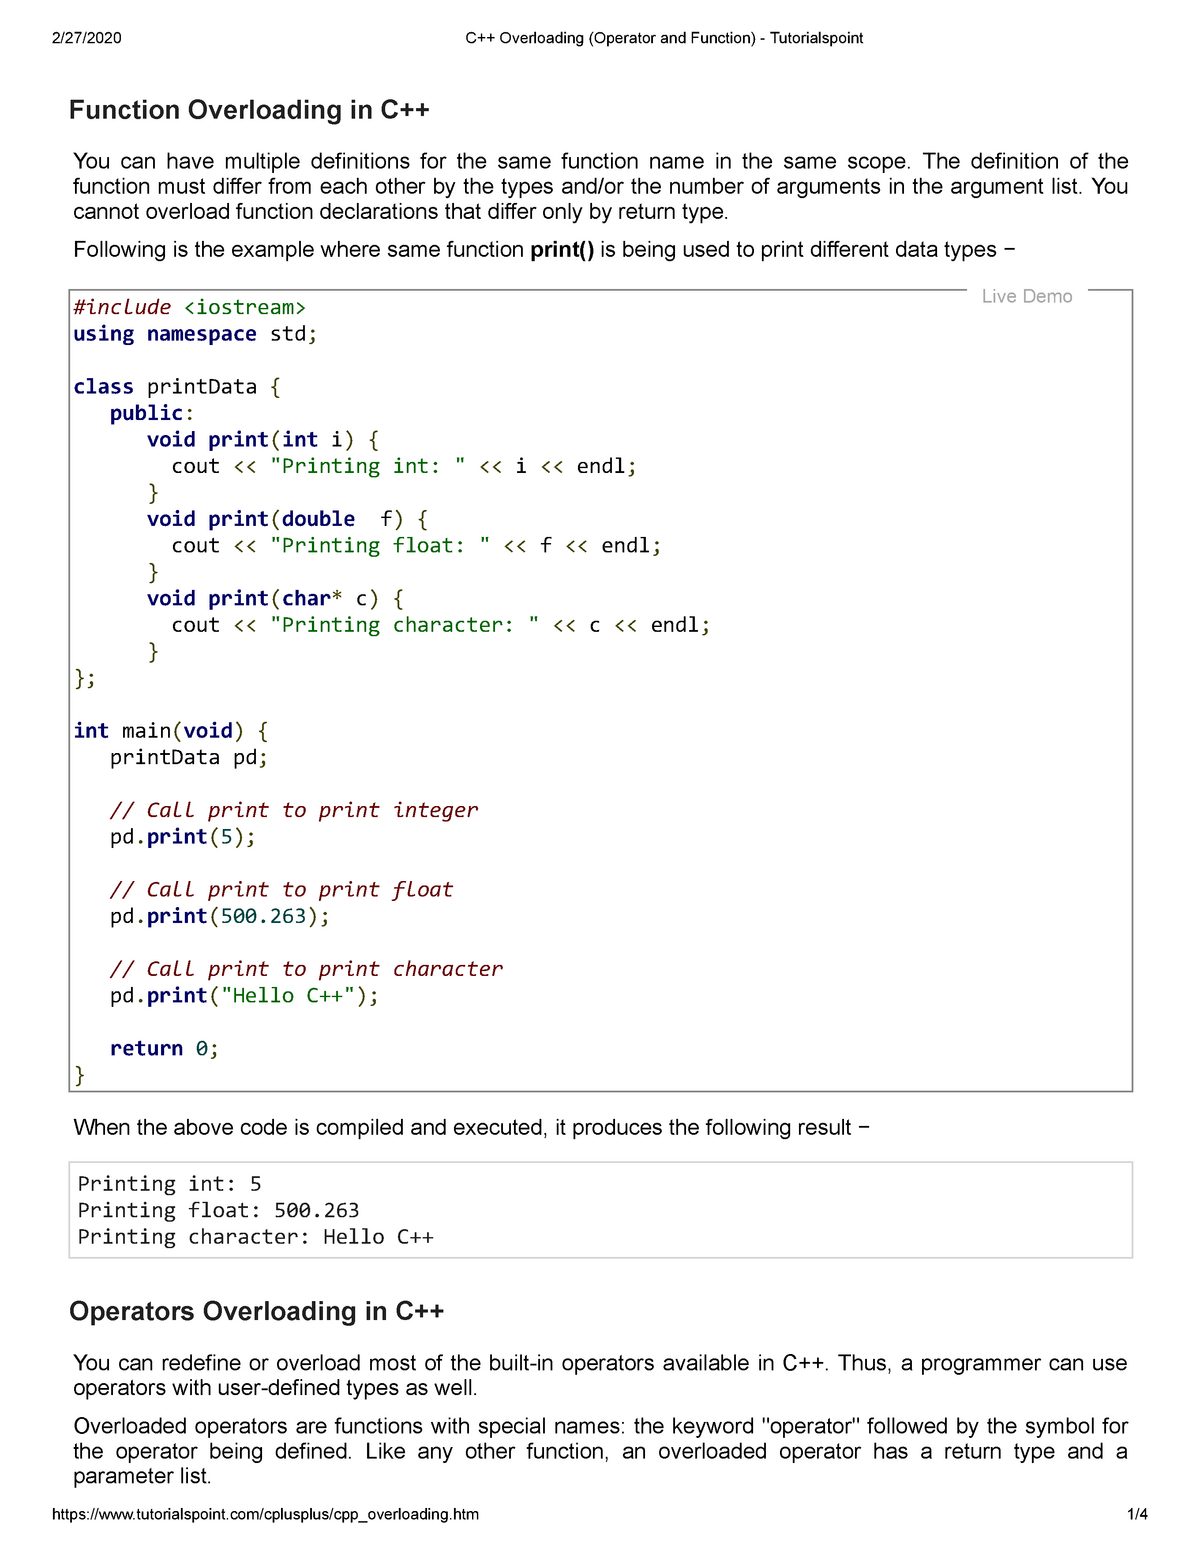 C++ Programming Operator Overloading